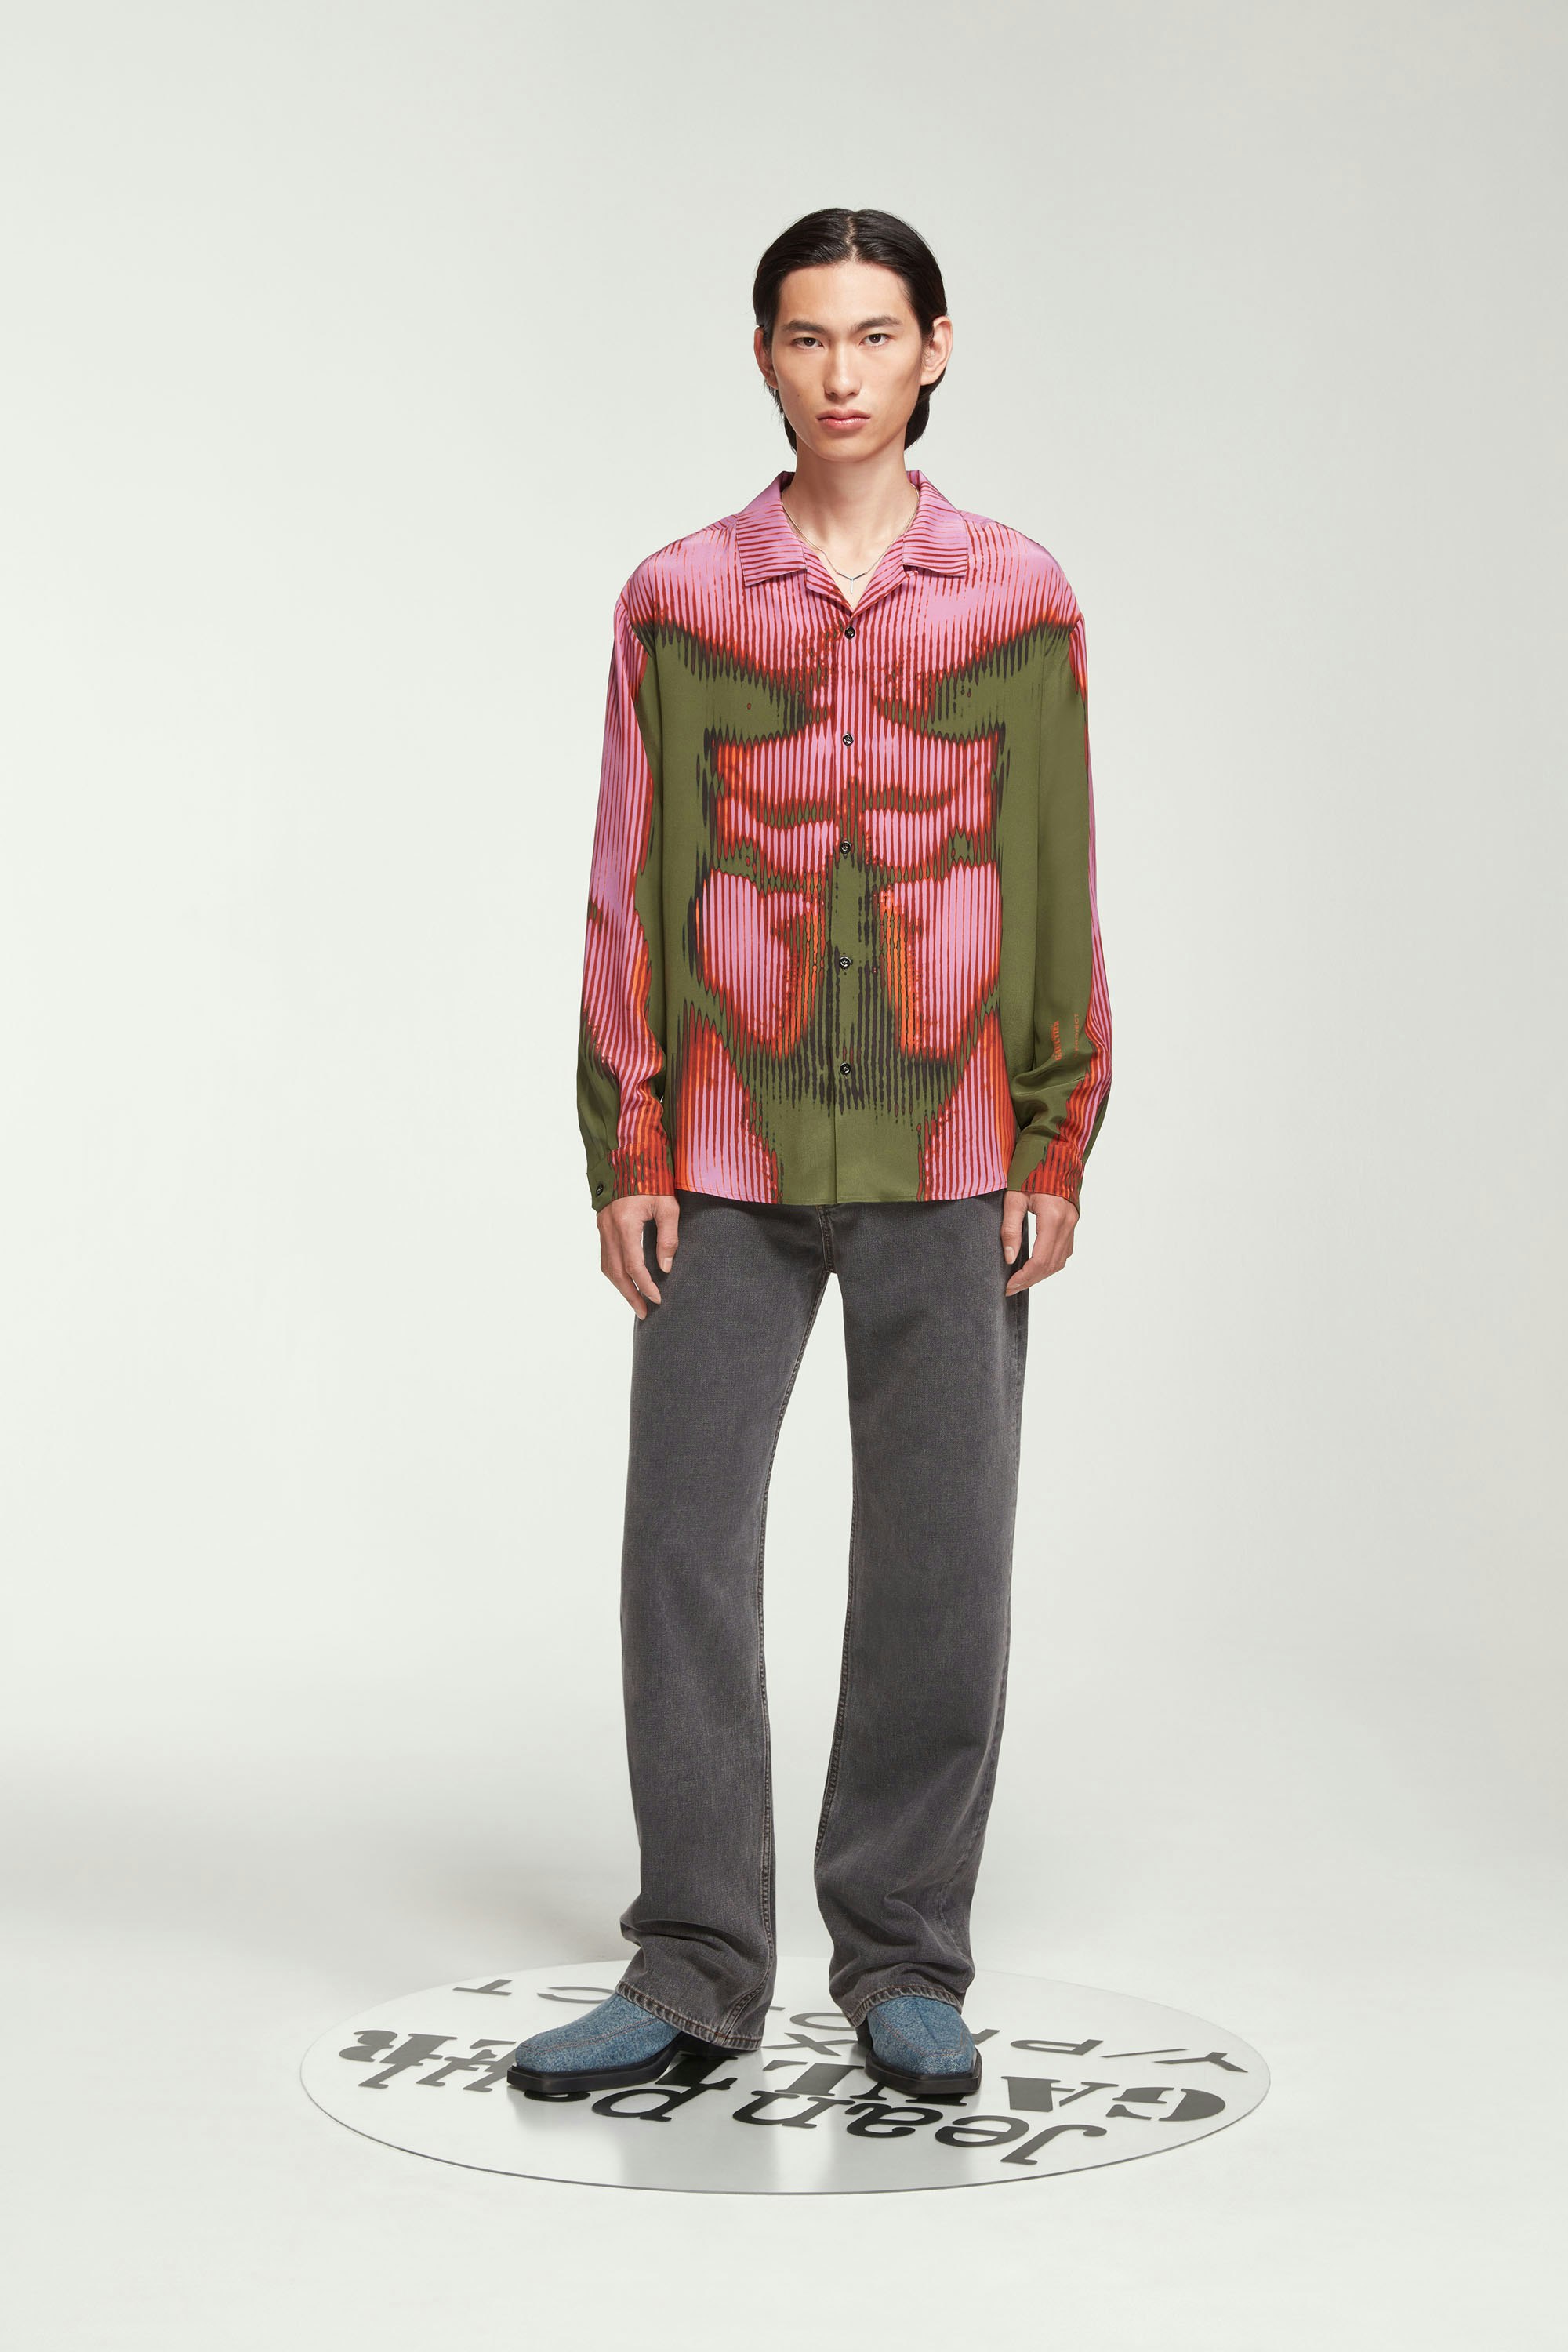 The Pink & Khaki Body Morph Pyjama Top by Jean Paul Gaultier x Y/Project